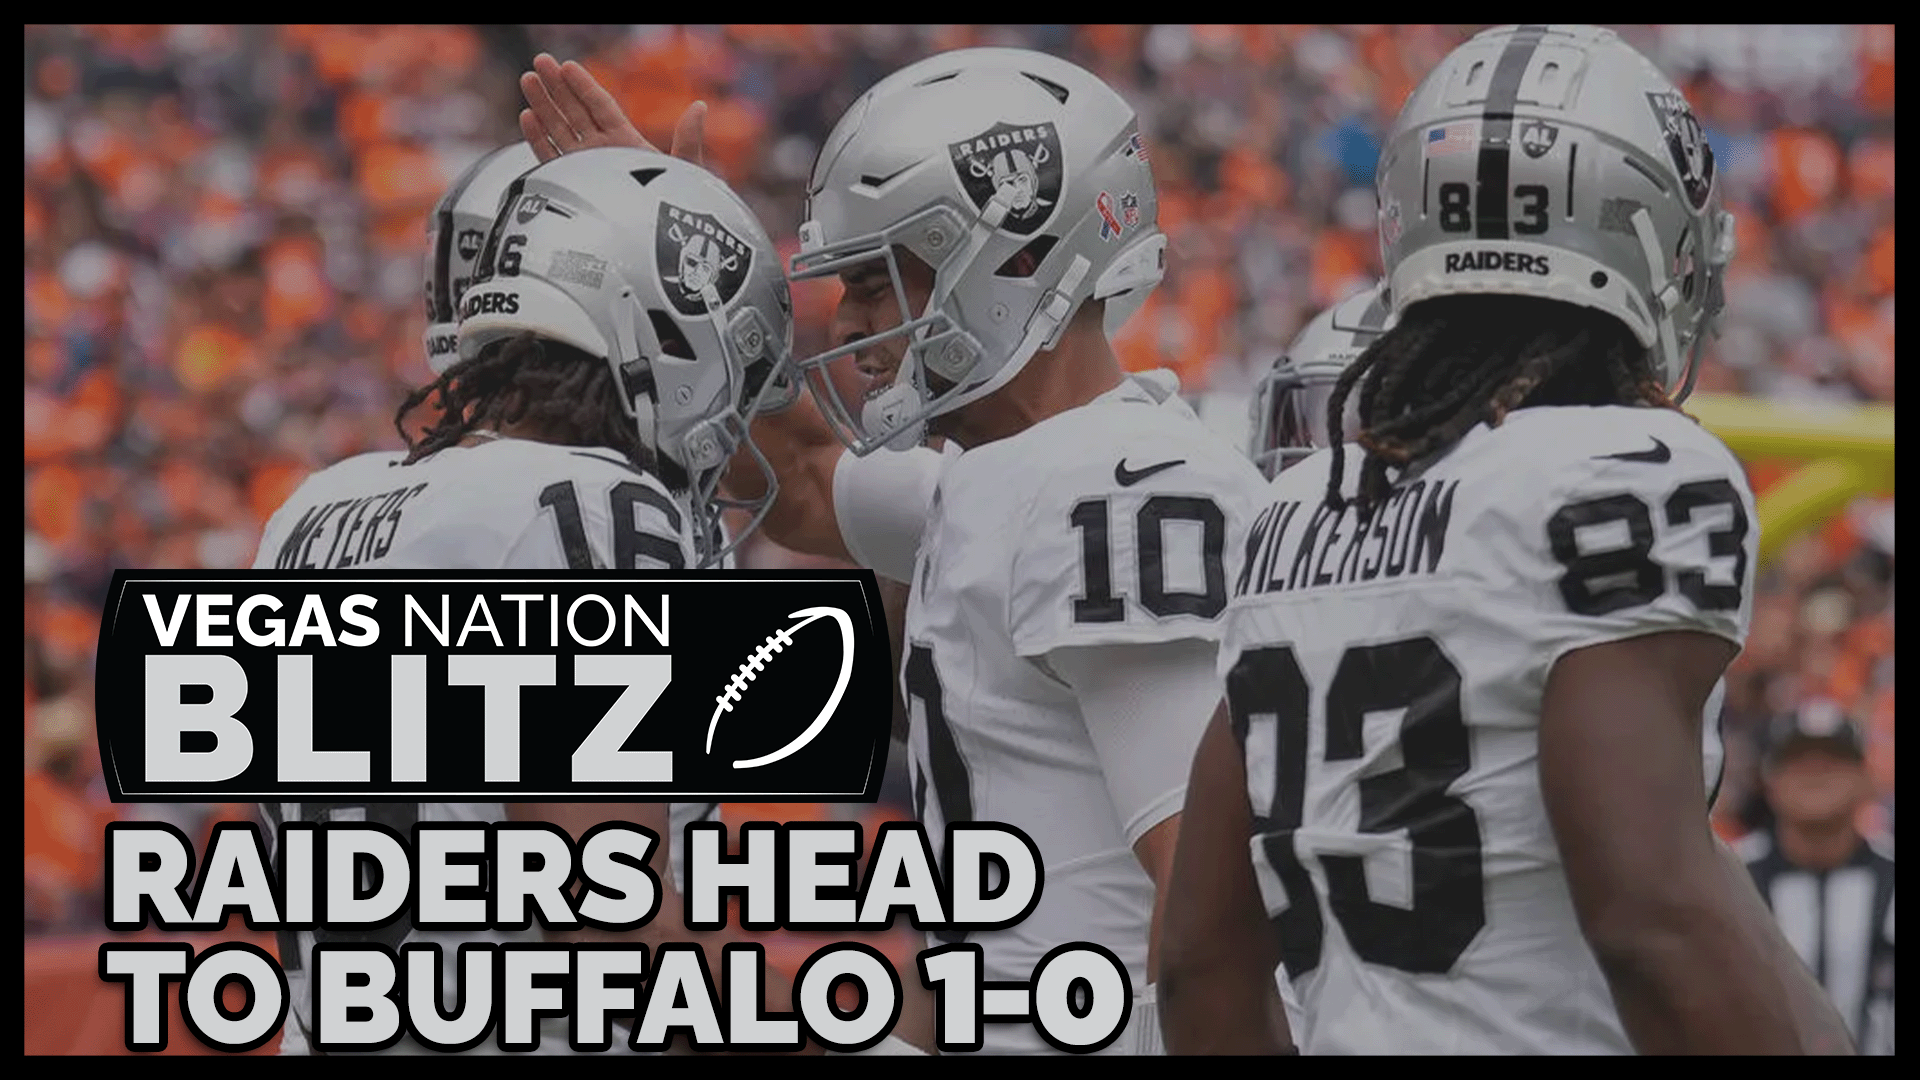 Raiders head to Buffalo 1-0 | Vegas Nation Blitz